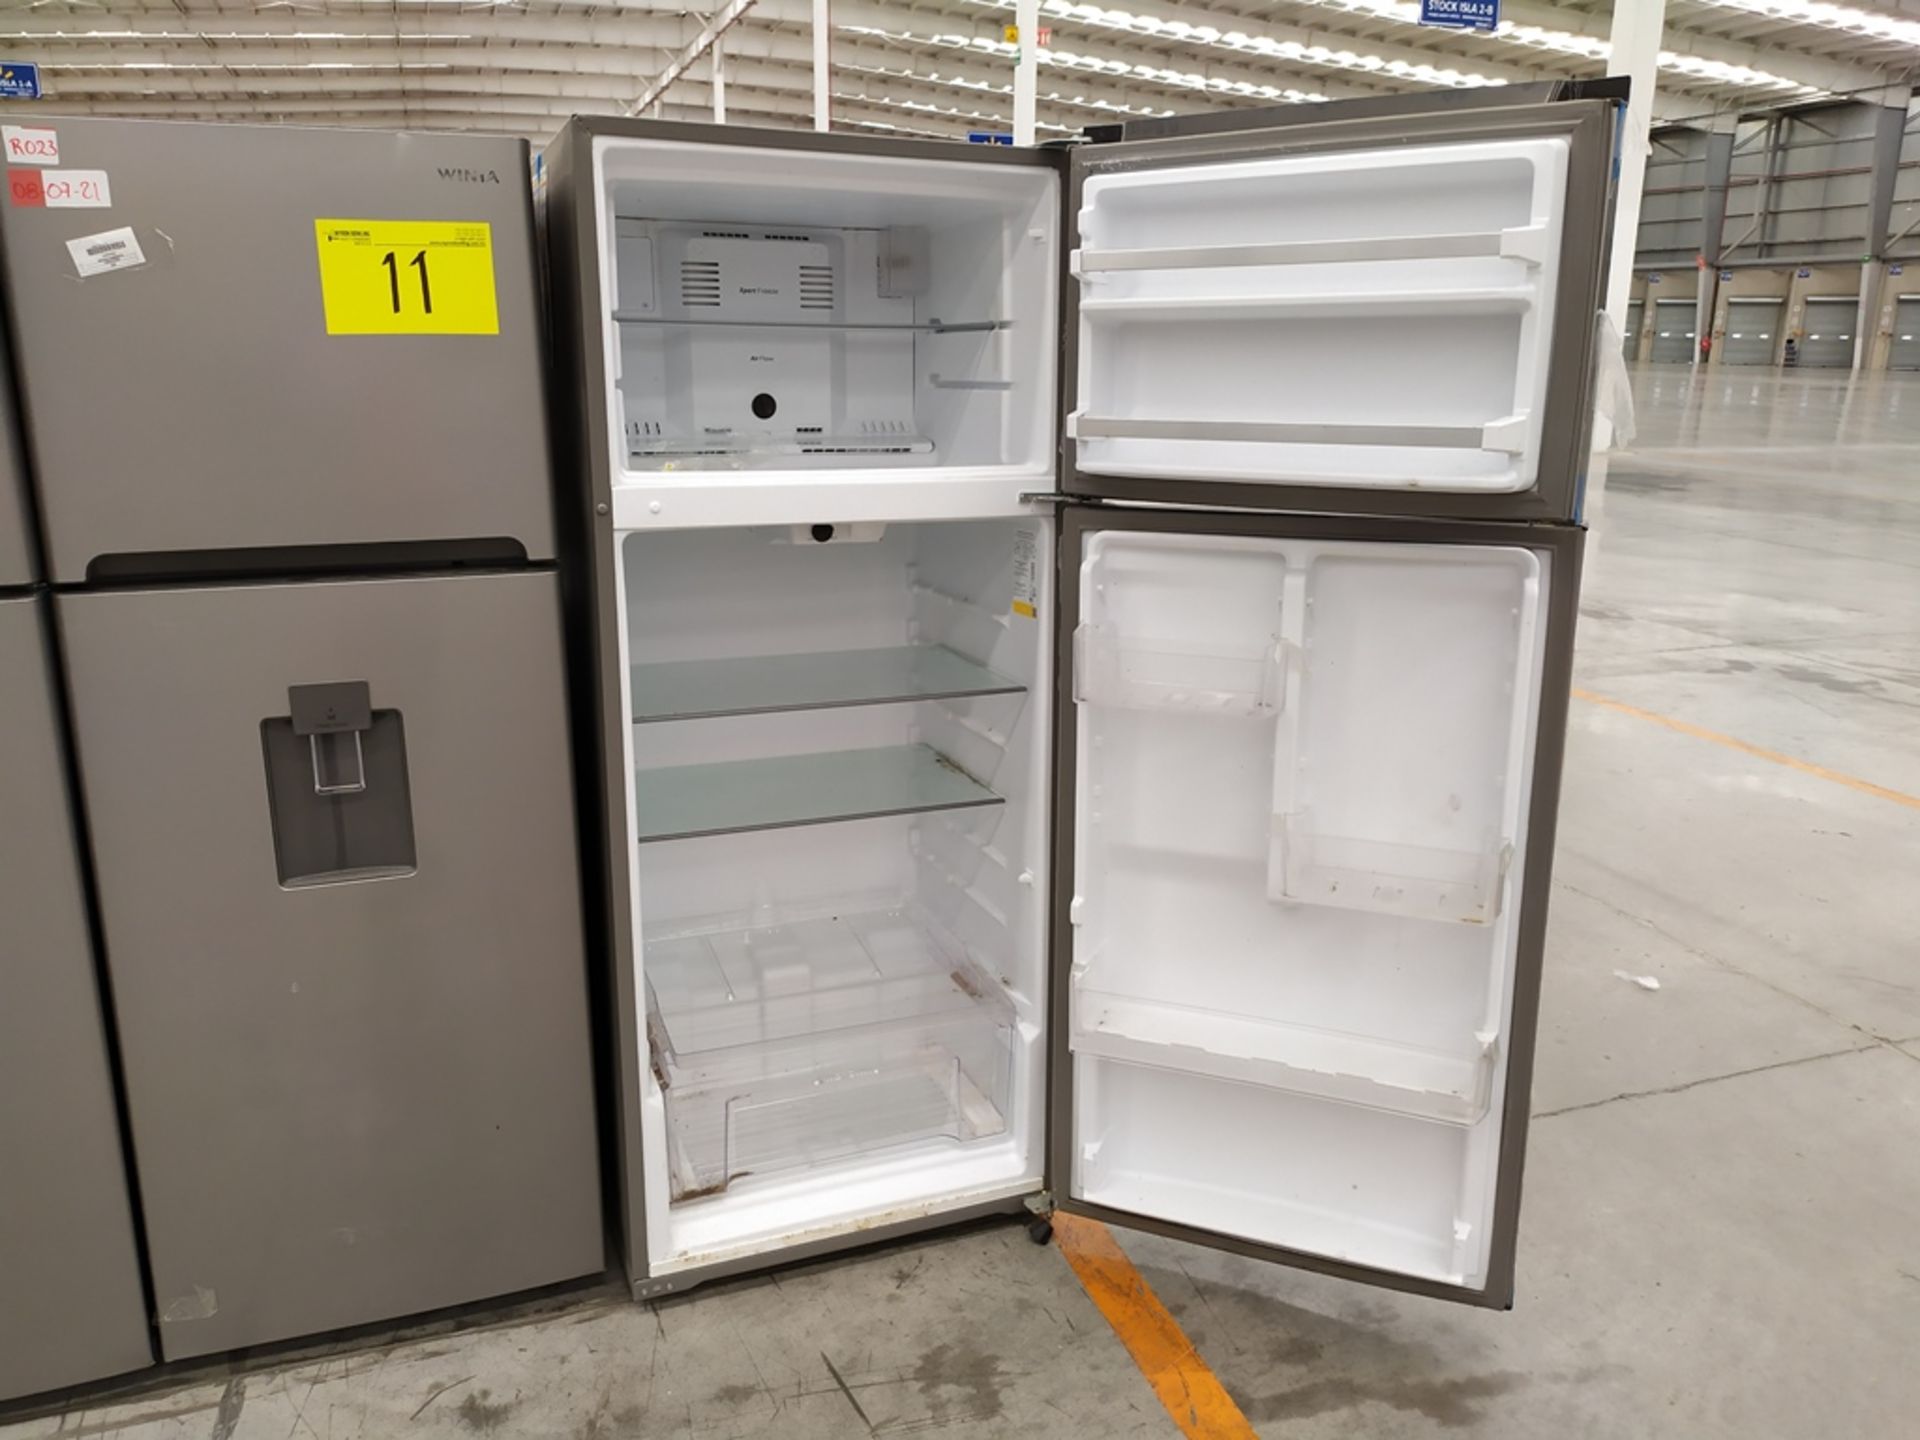 Refrigerador marca Whirlpool, Modelo WT1818A, Serie VSX2369104, Color Gris, Golpeado, LB-0880609014 - Image 4 of 8